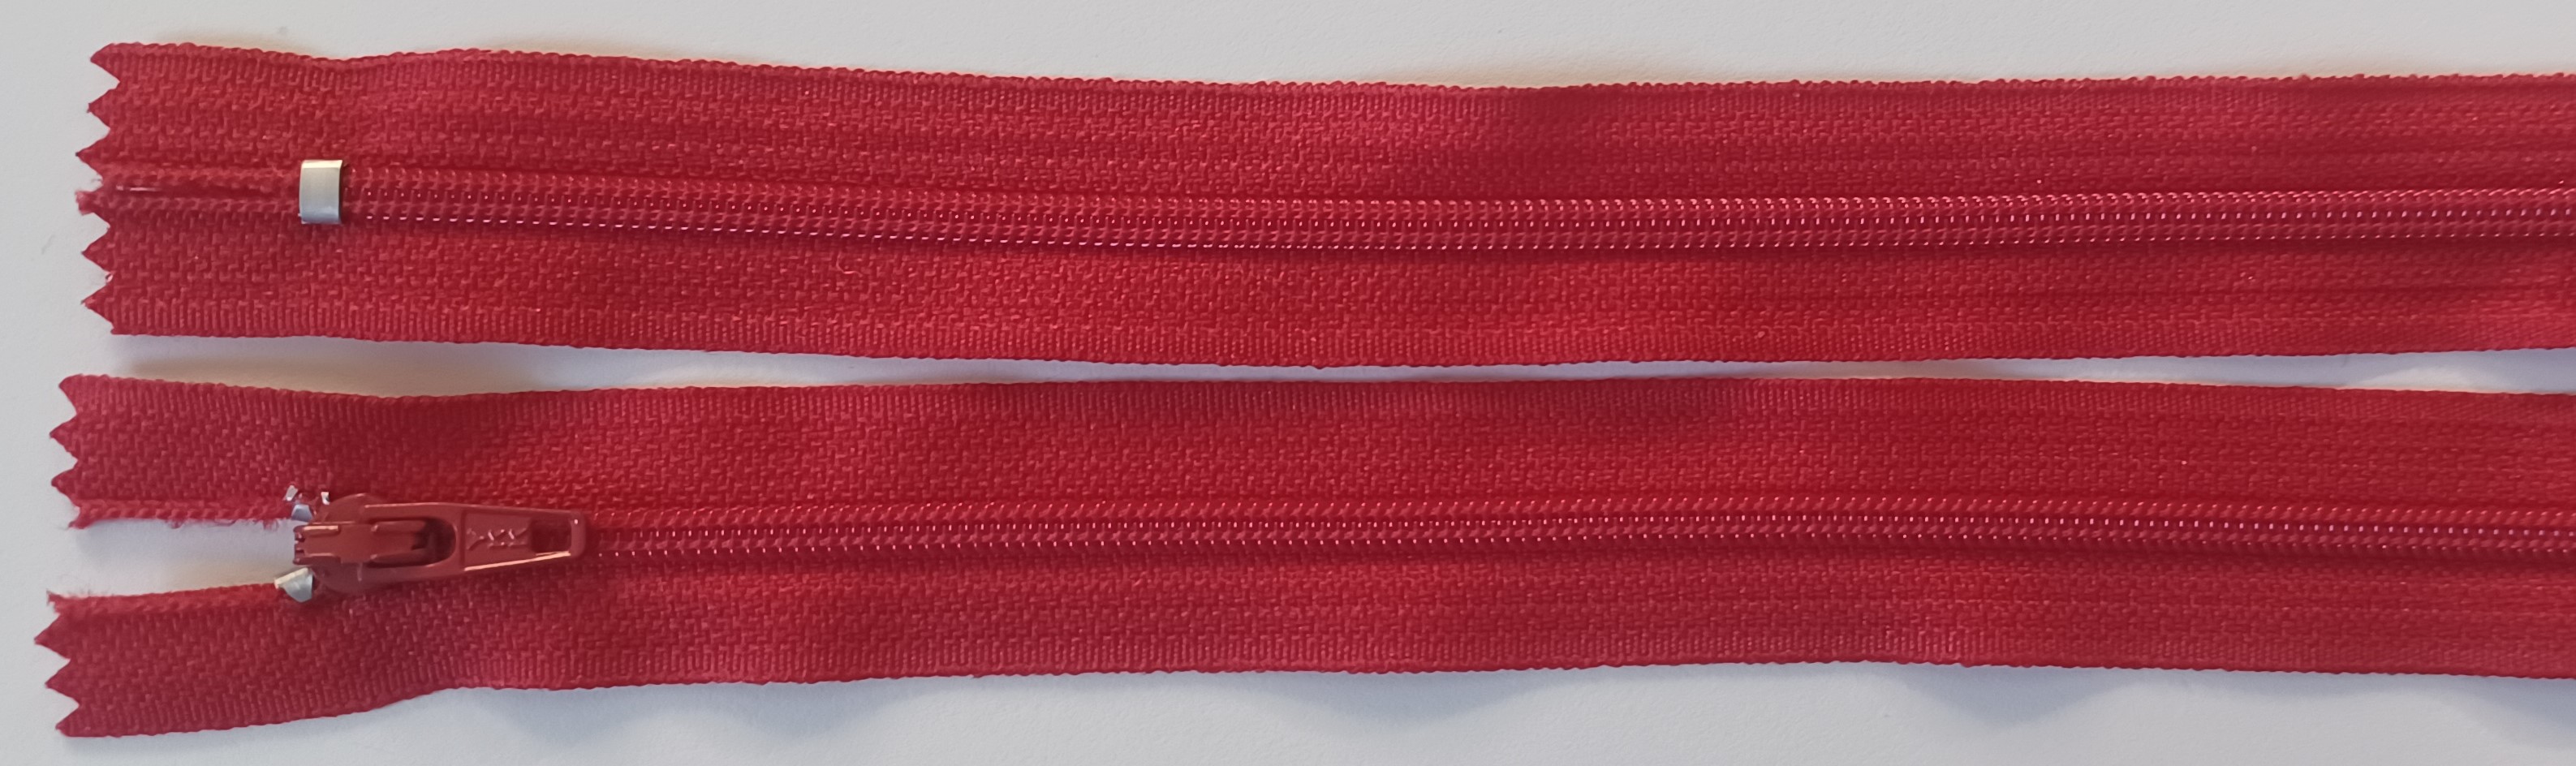 YKK 8" Red Nylon Coil Zipper